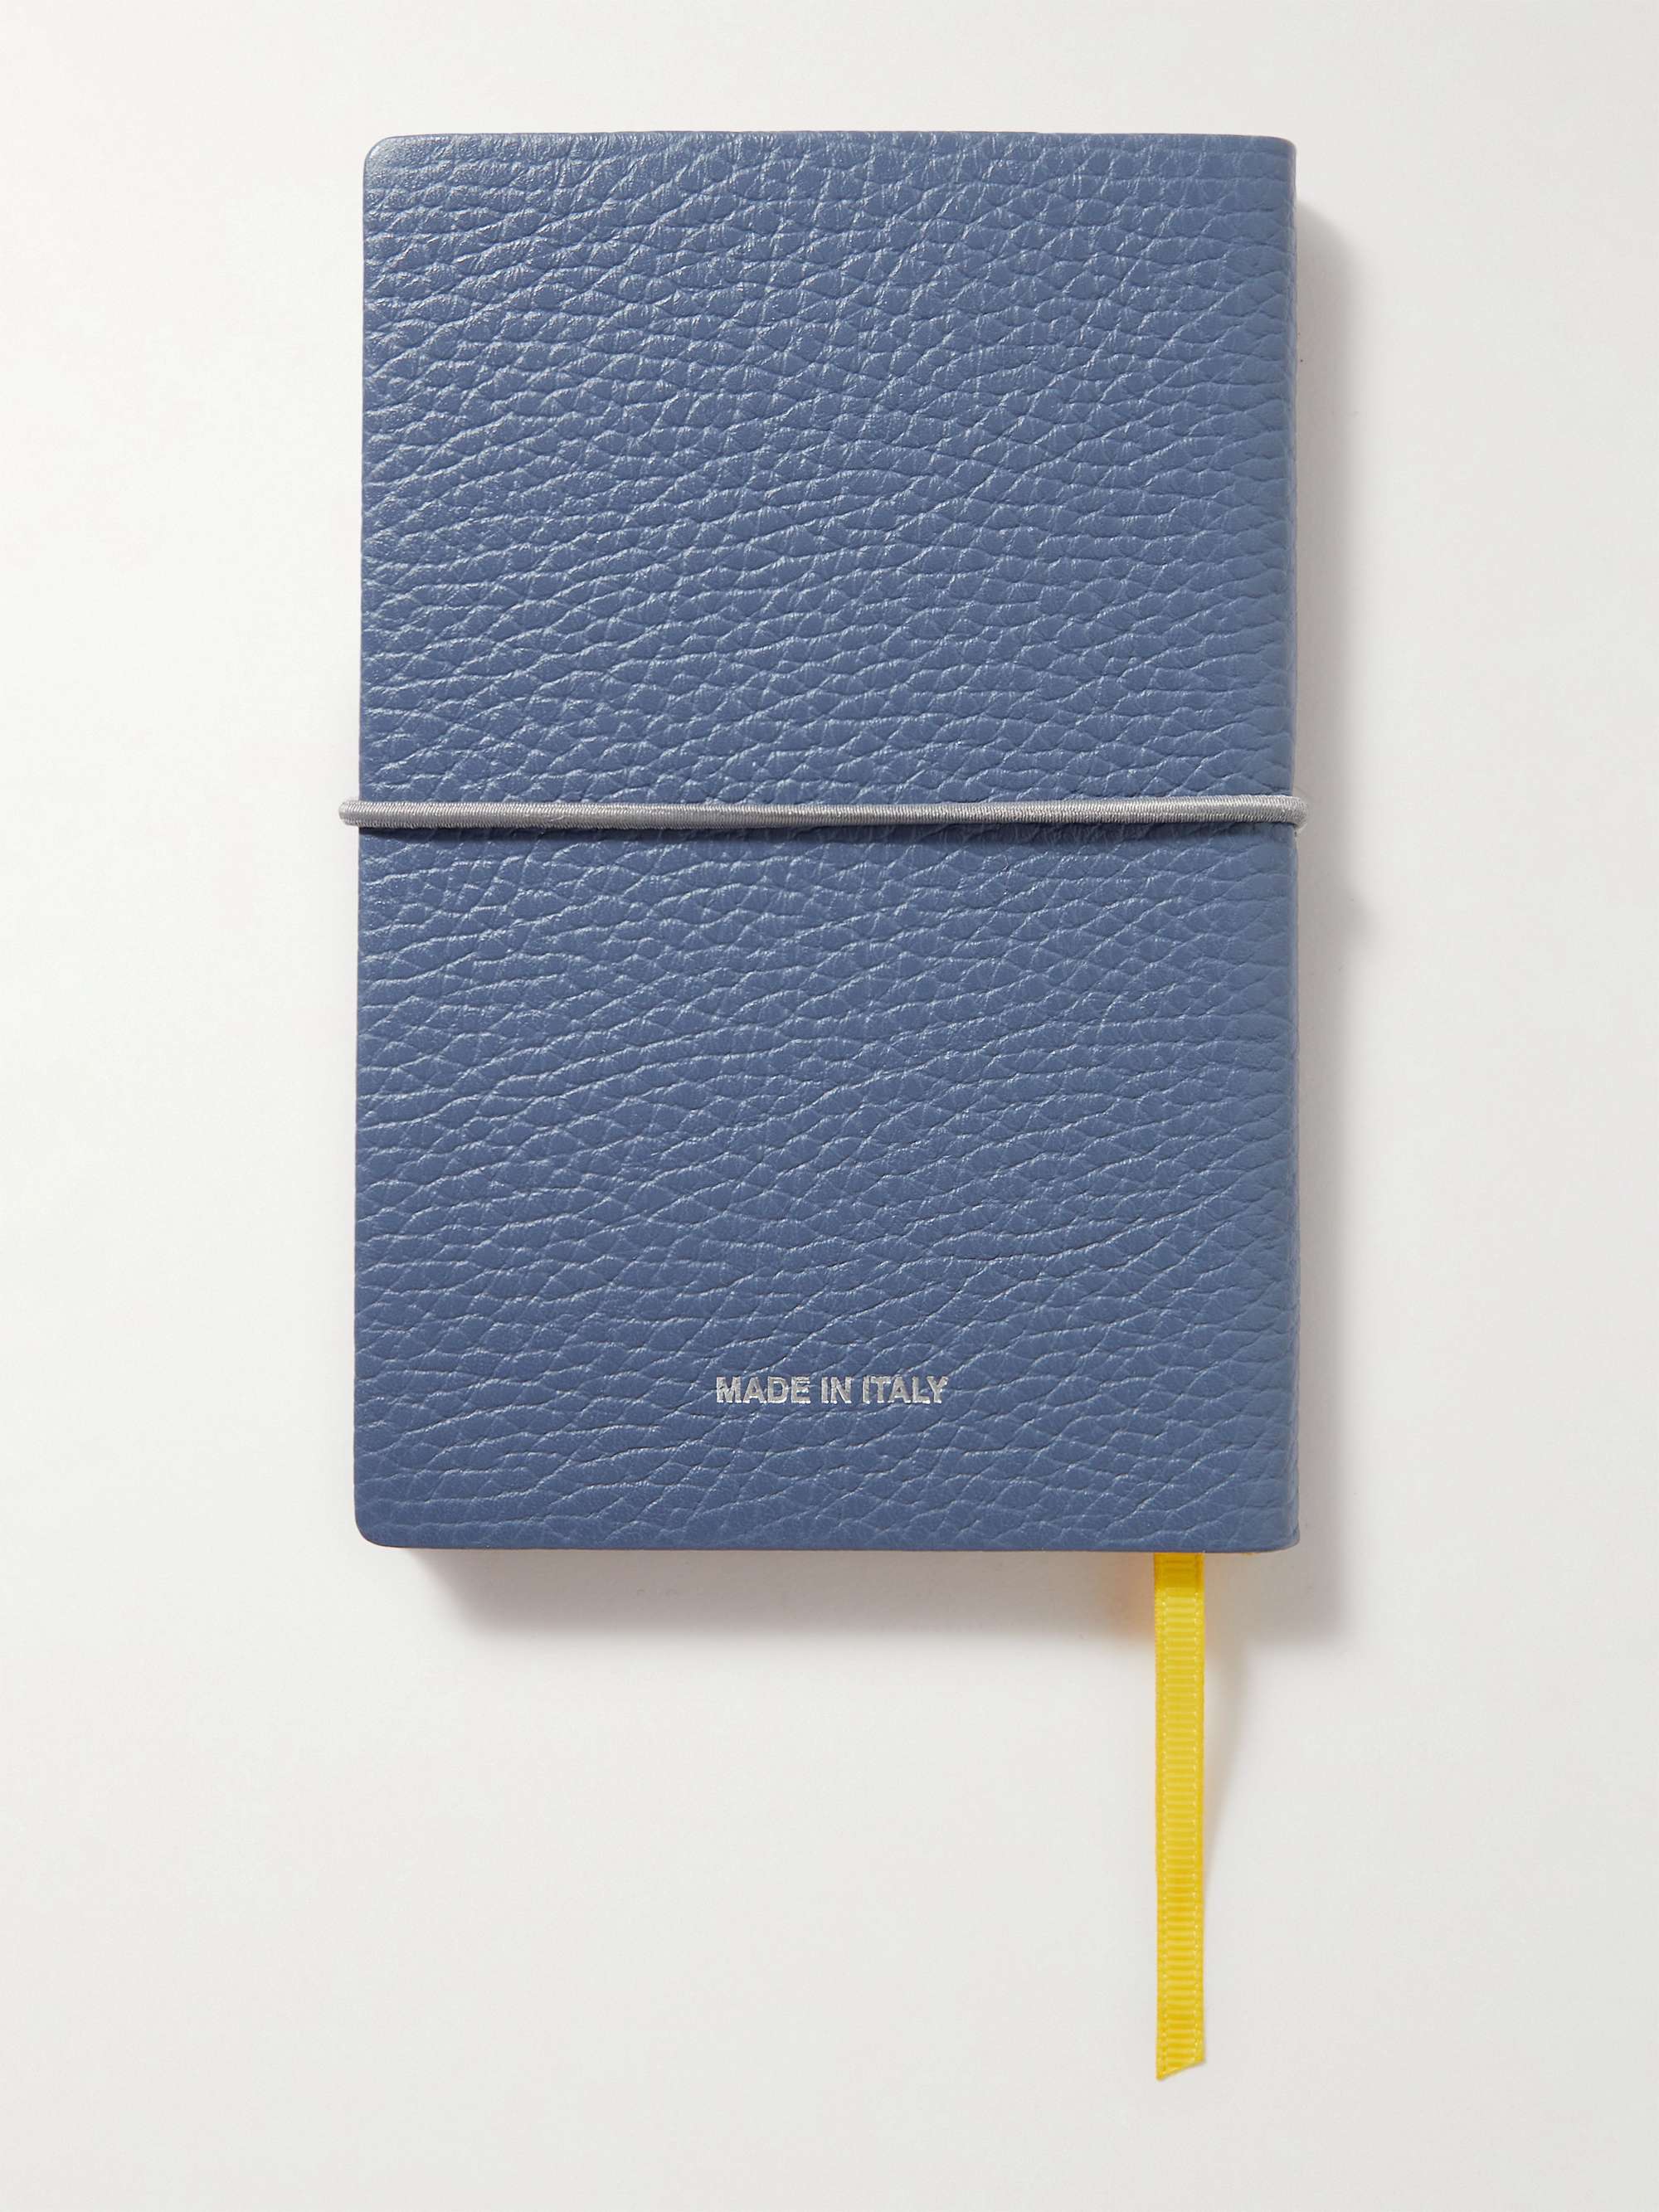 SERAPIAN Small Logo-Print Full-Grain Leather Notebook